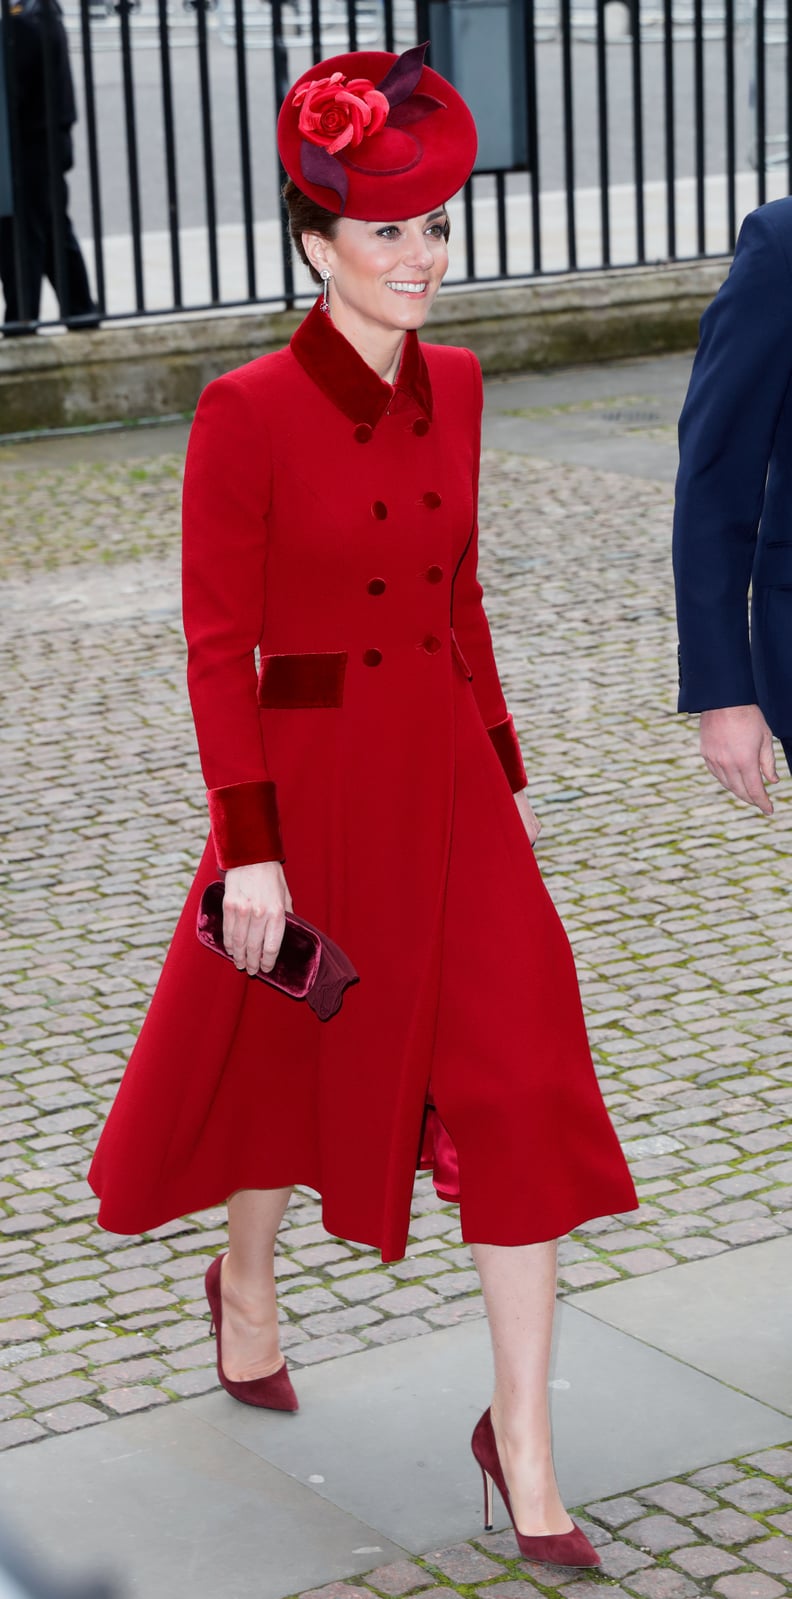 Kate Loves a Catherine Walker Coat